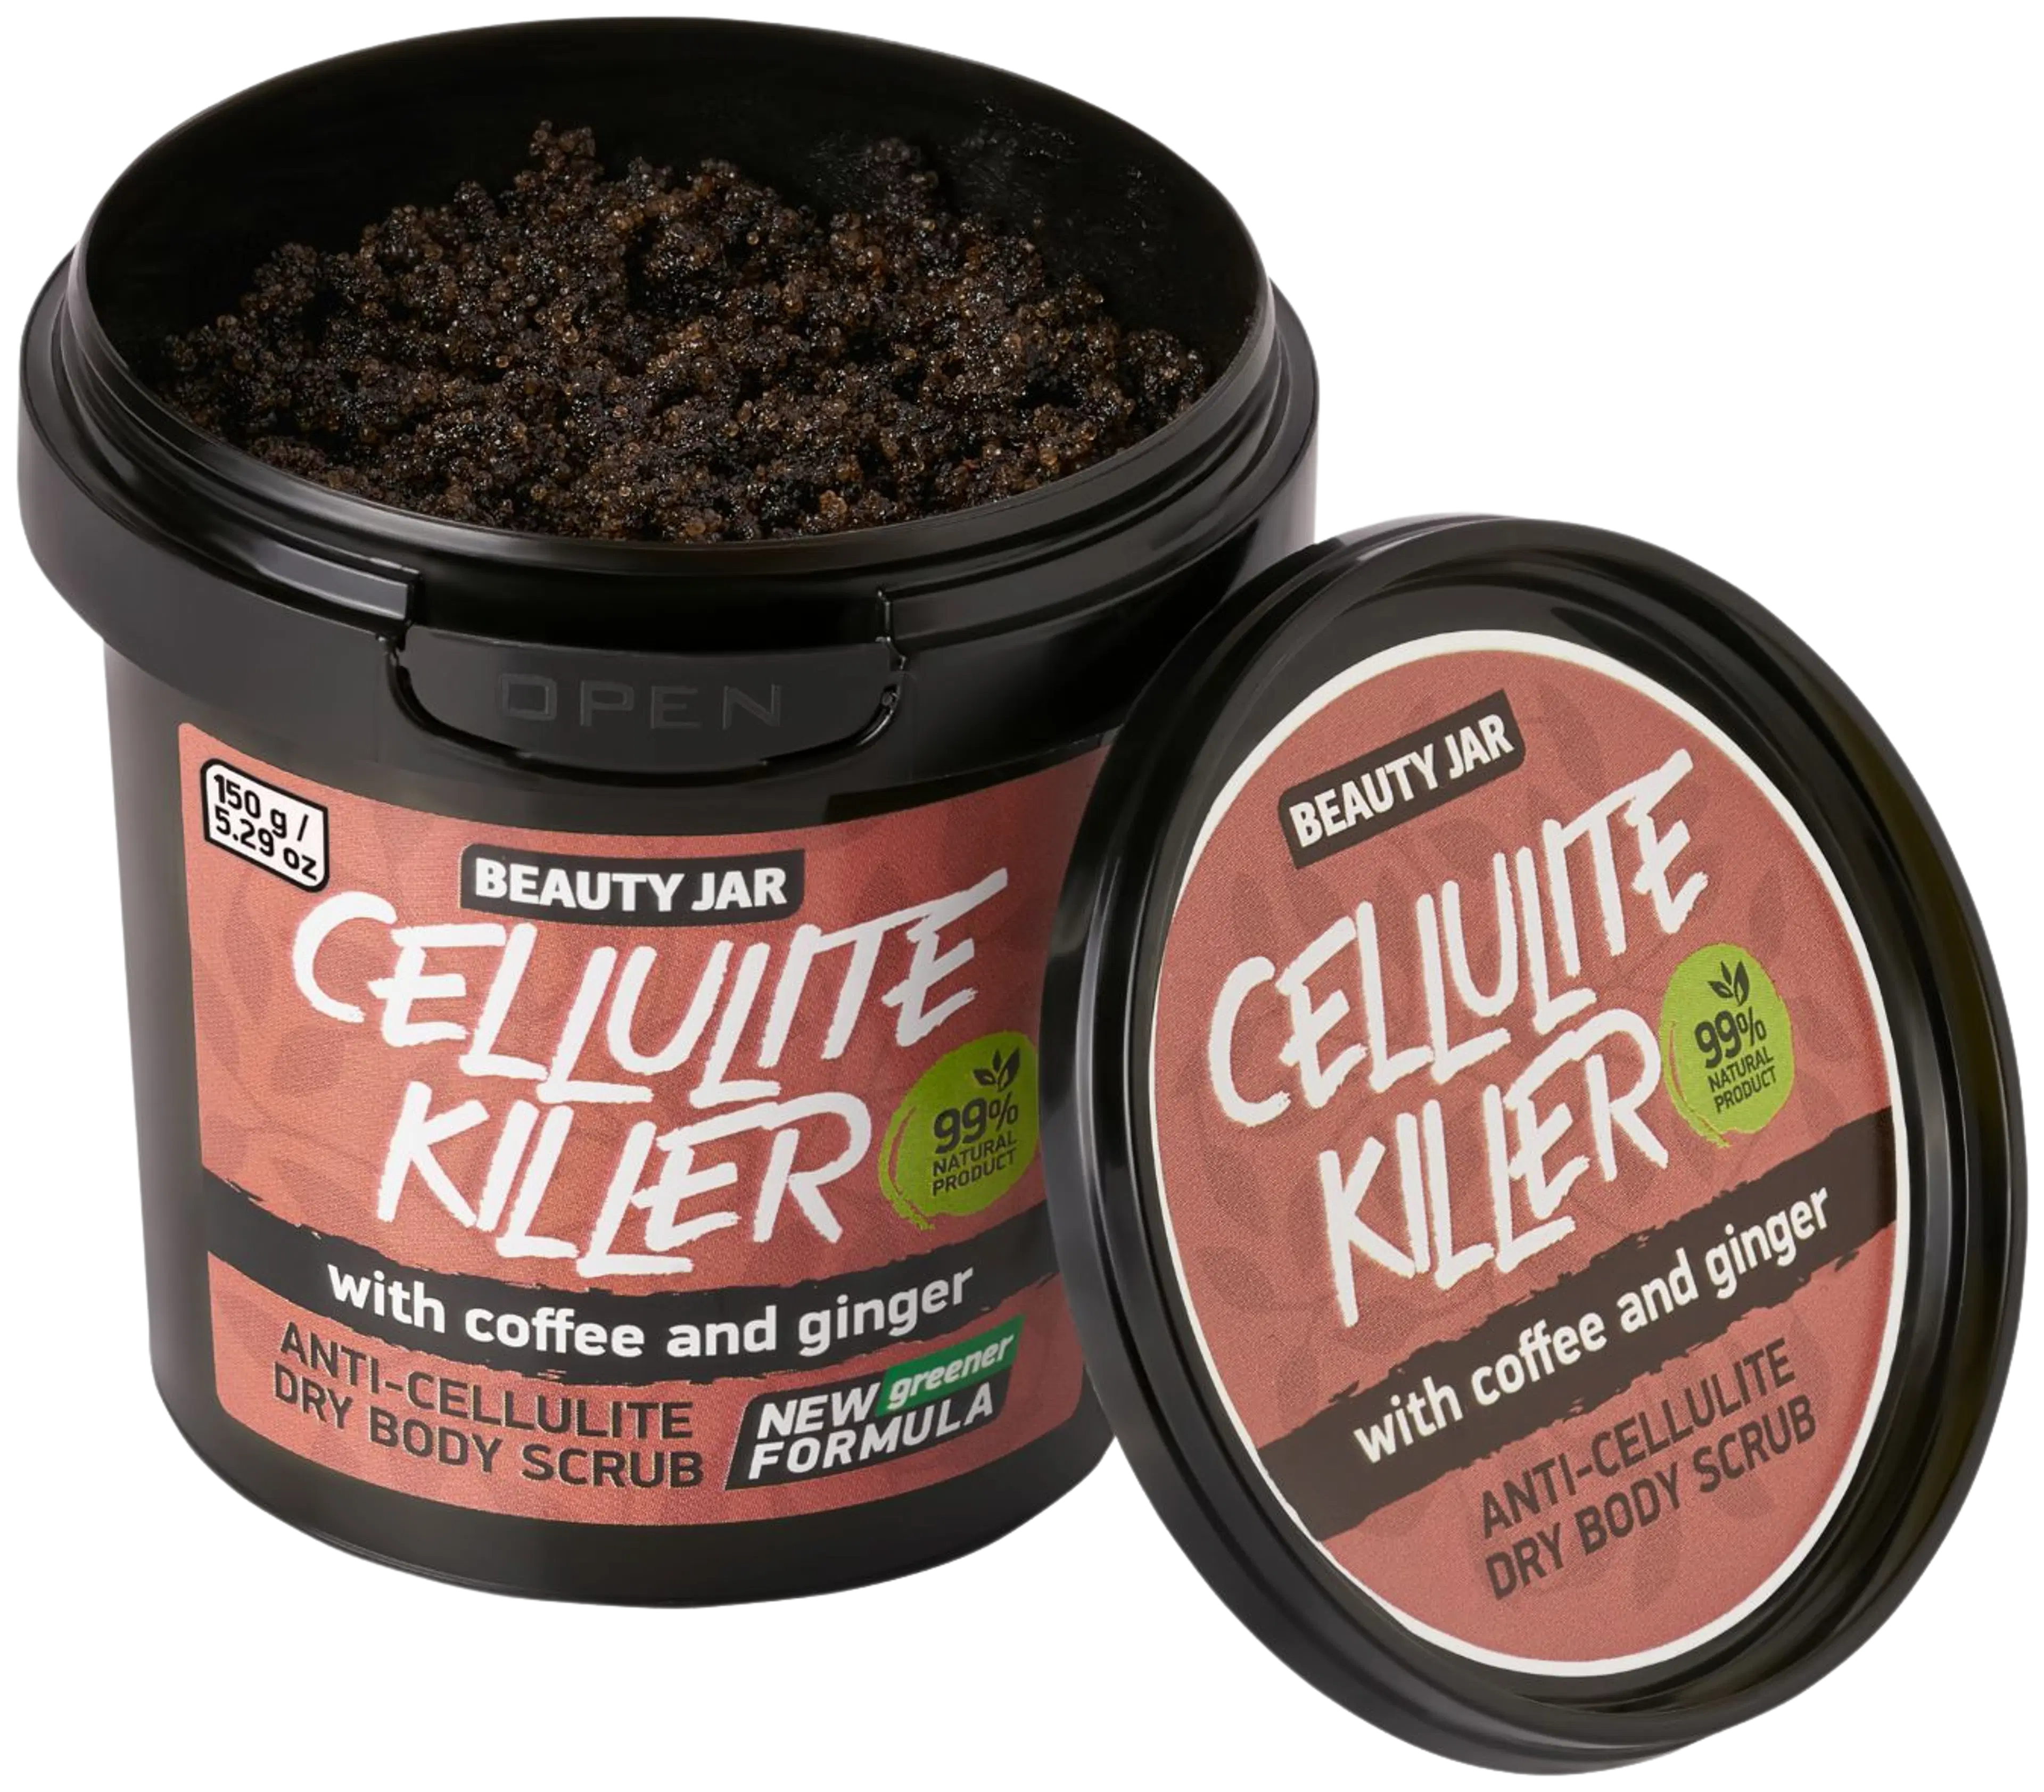 Beauty Jar Cellulite Killer Dry Body Scrub vartalokuorinta 150 g